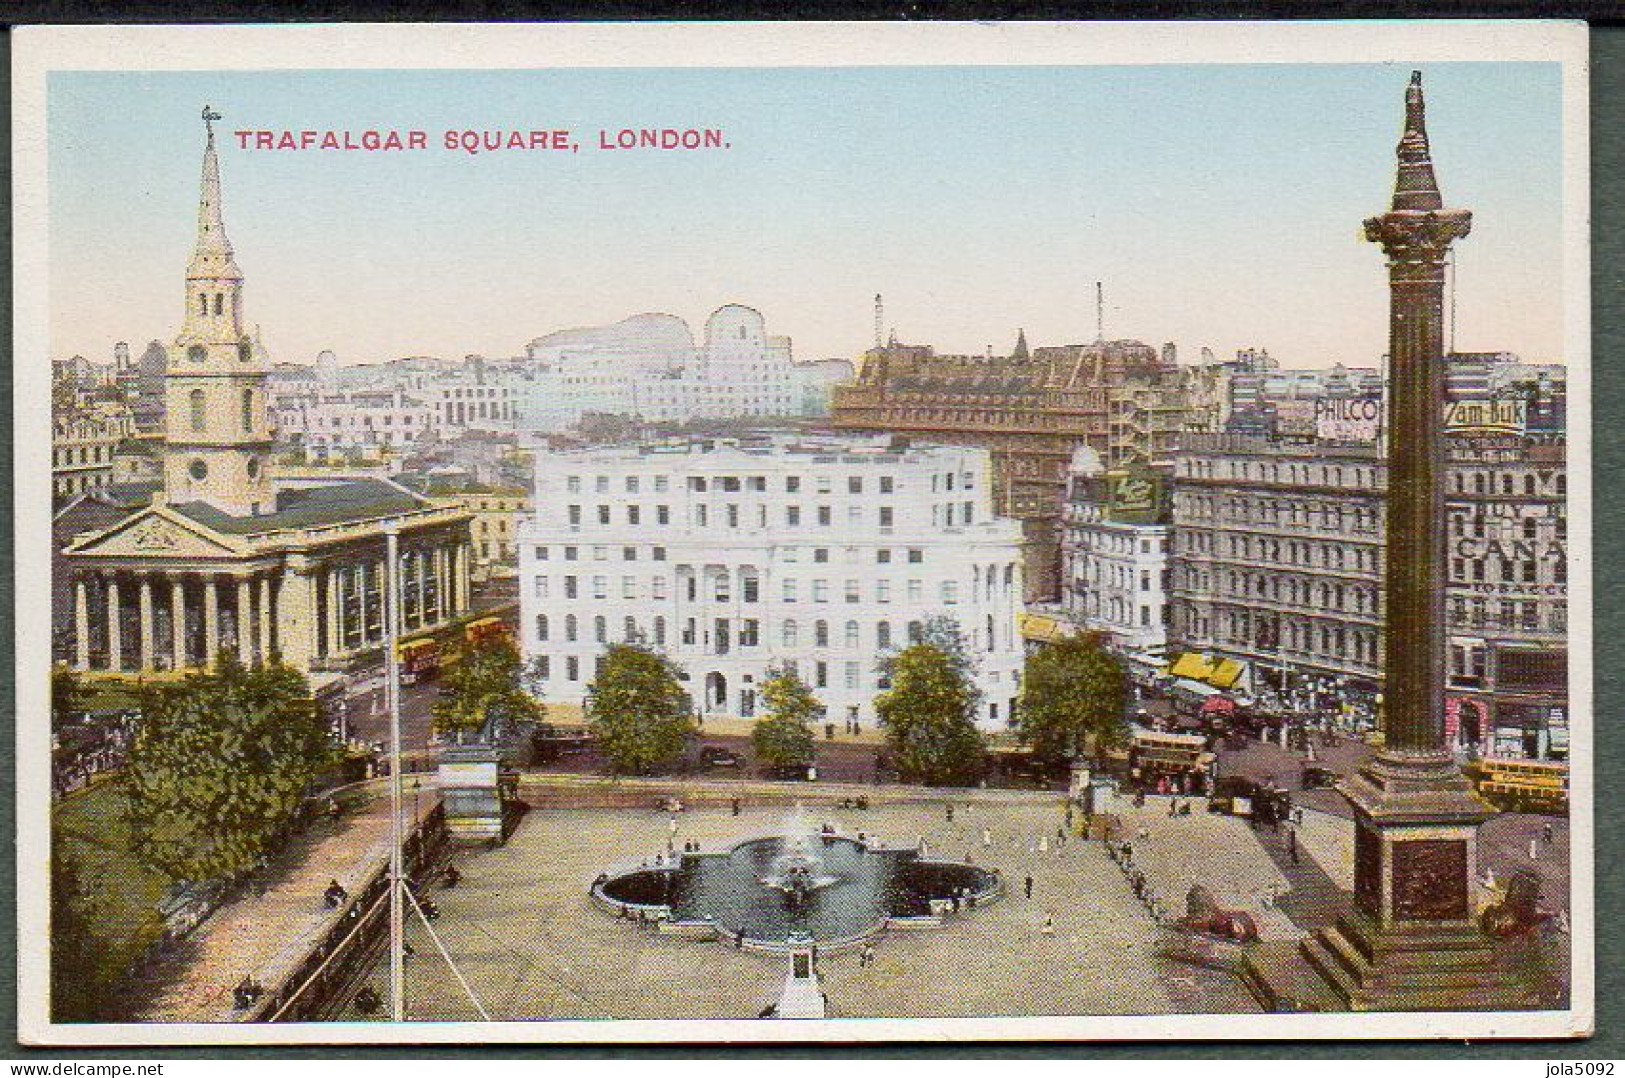 ROYAUME UNI - LONDON/LONDRES - Trafalgar Square - Trafalgar Square